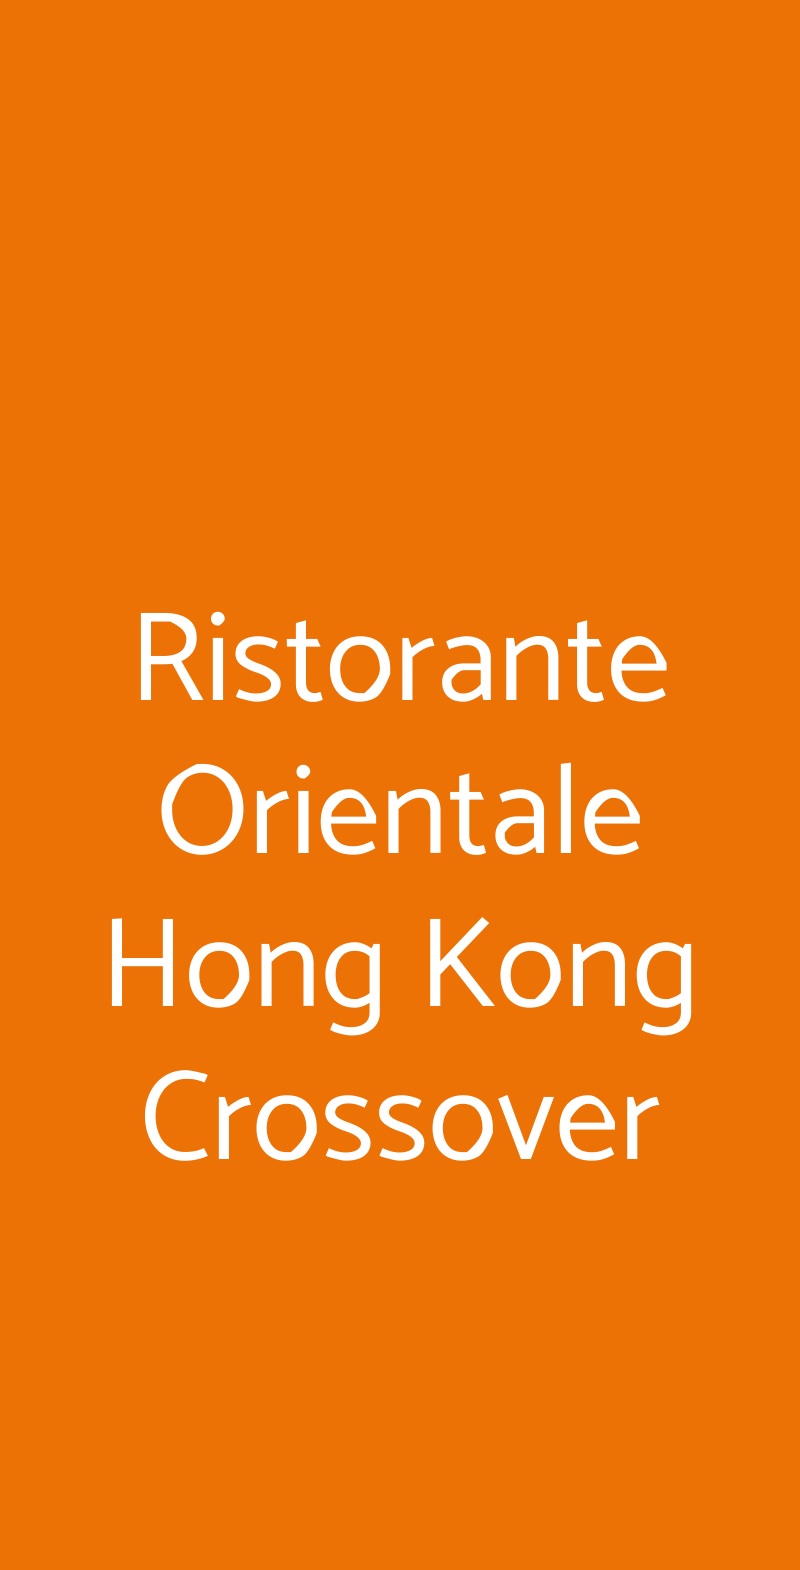 Ristorante Orientale Hong Kong Crossover Milano menù 1 pagina